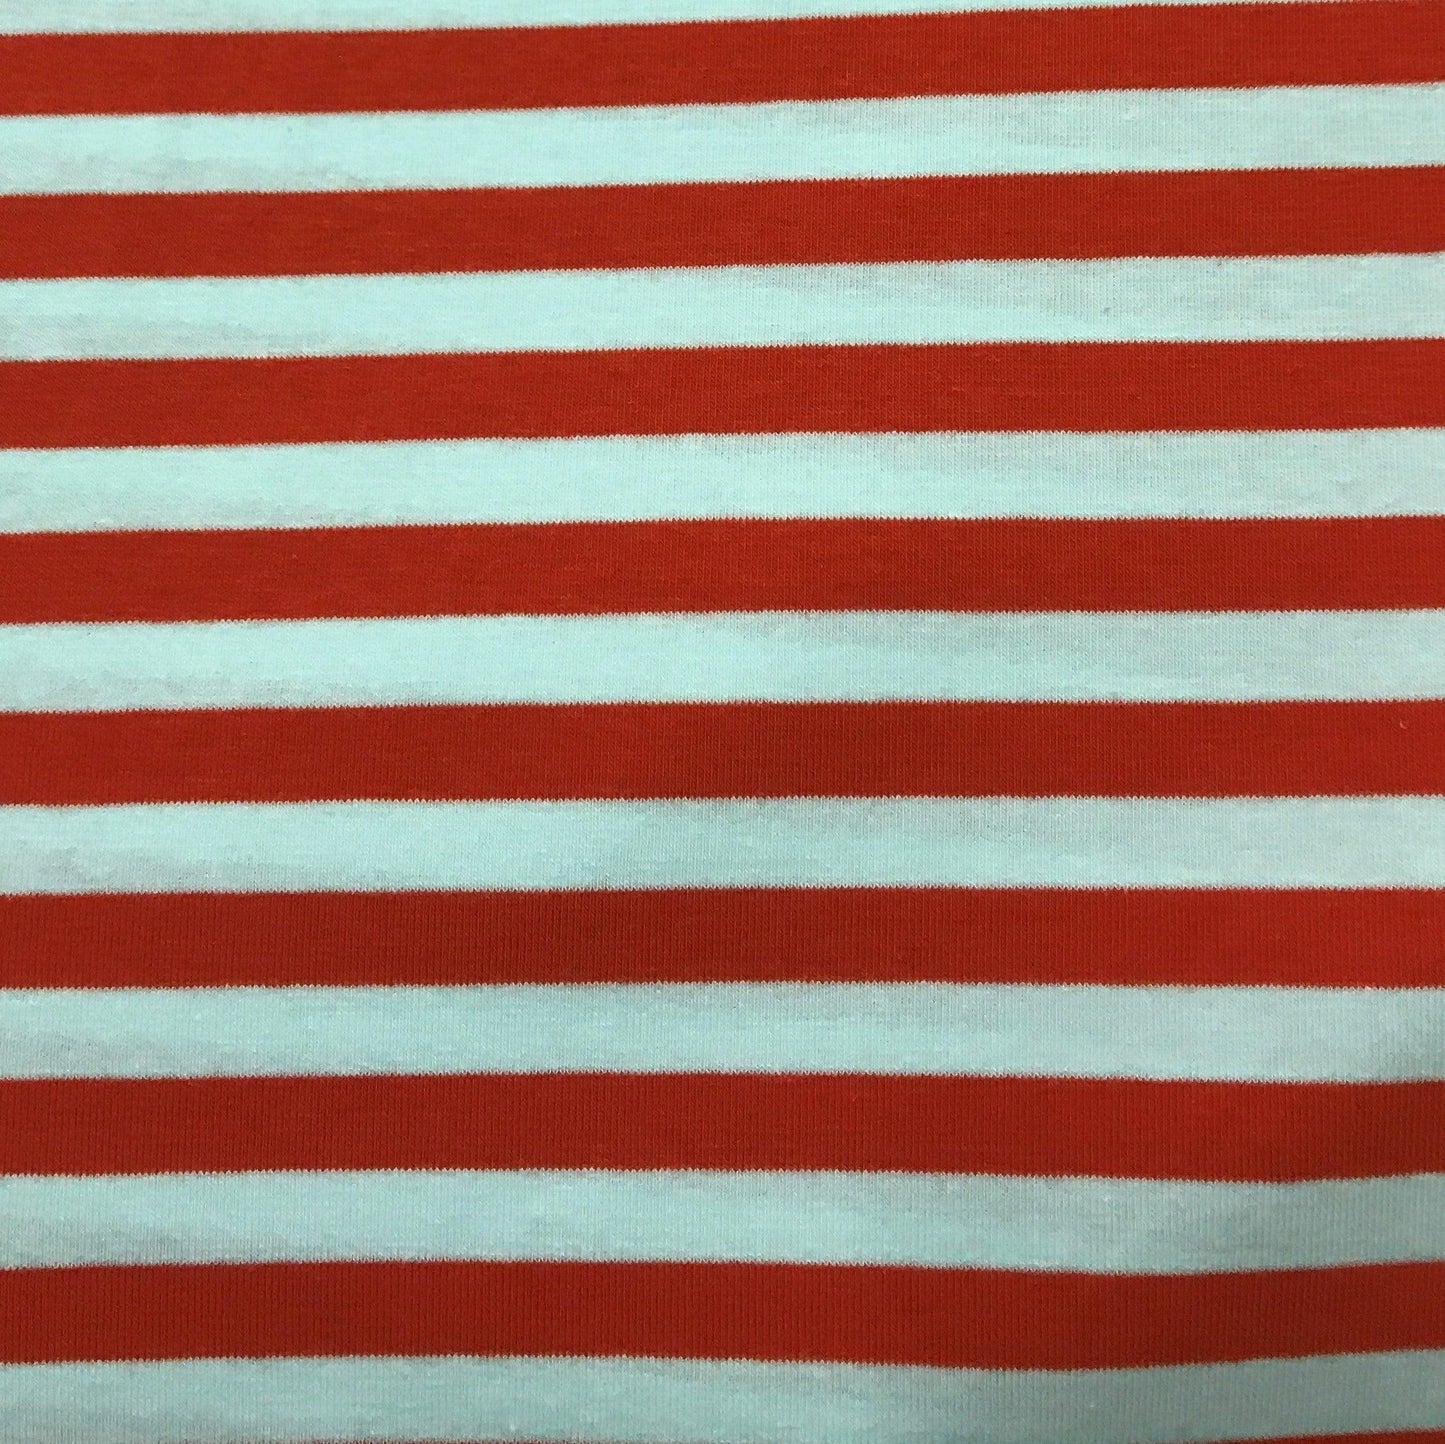 Orange and White 3/8" Stripes on Cotton/Spandex Jersey